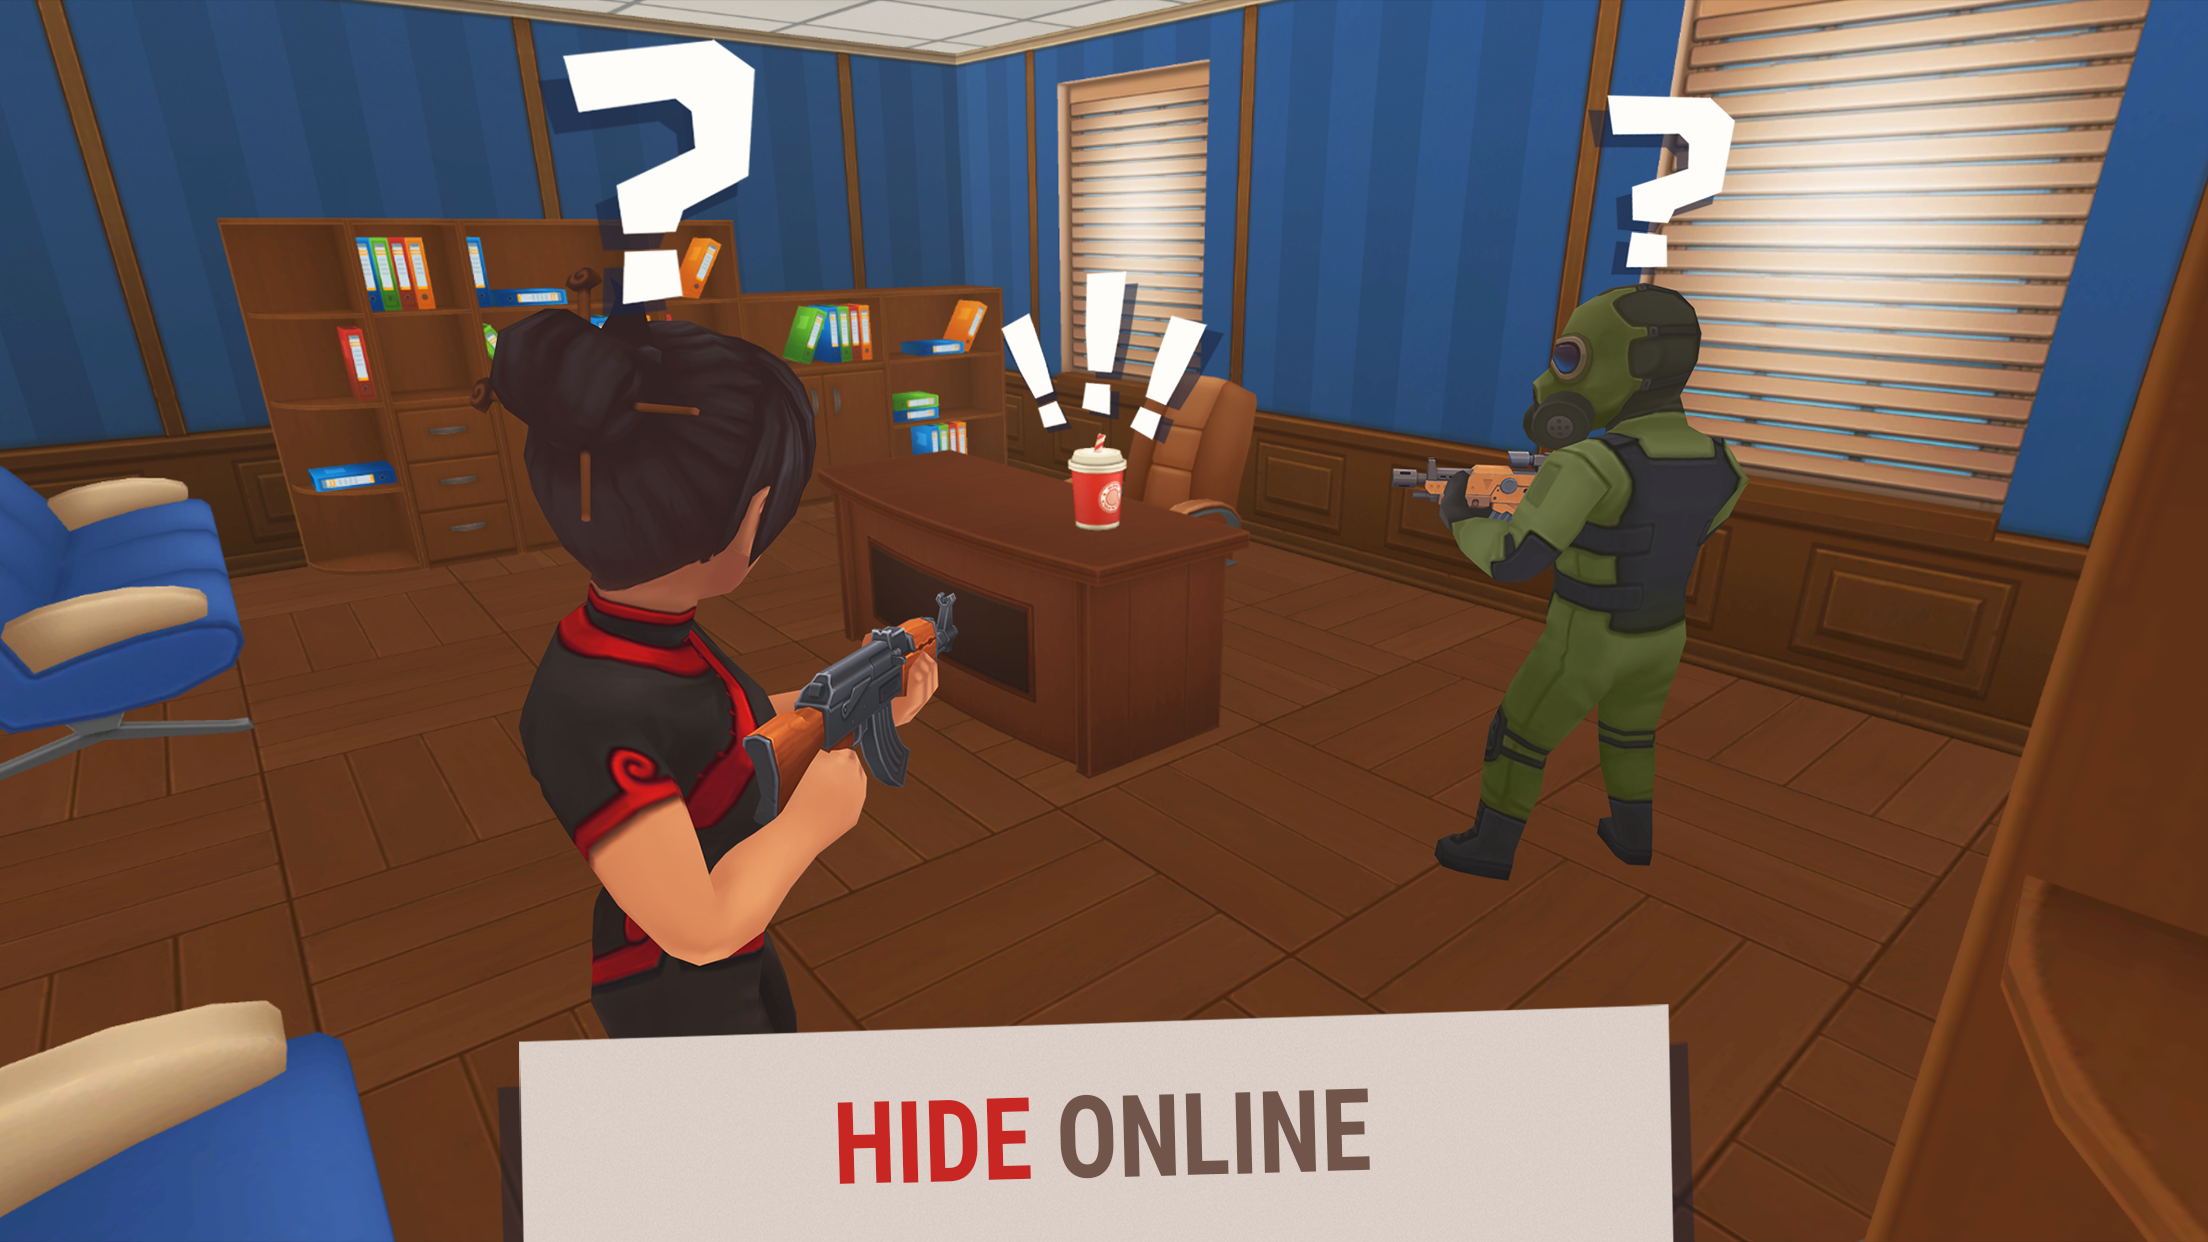 Download & Play Hide Online - Hunters vs Props on PC & Mac (Emulator)